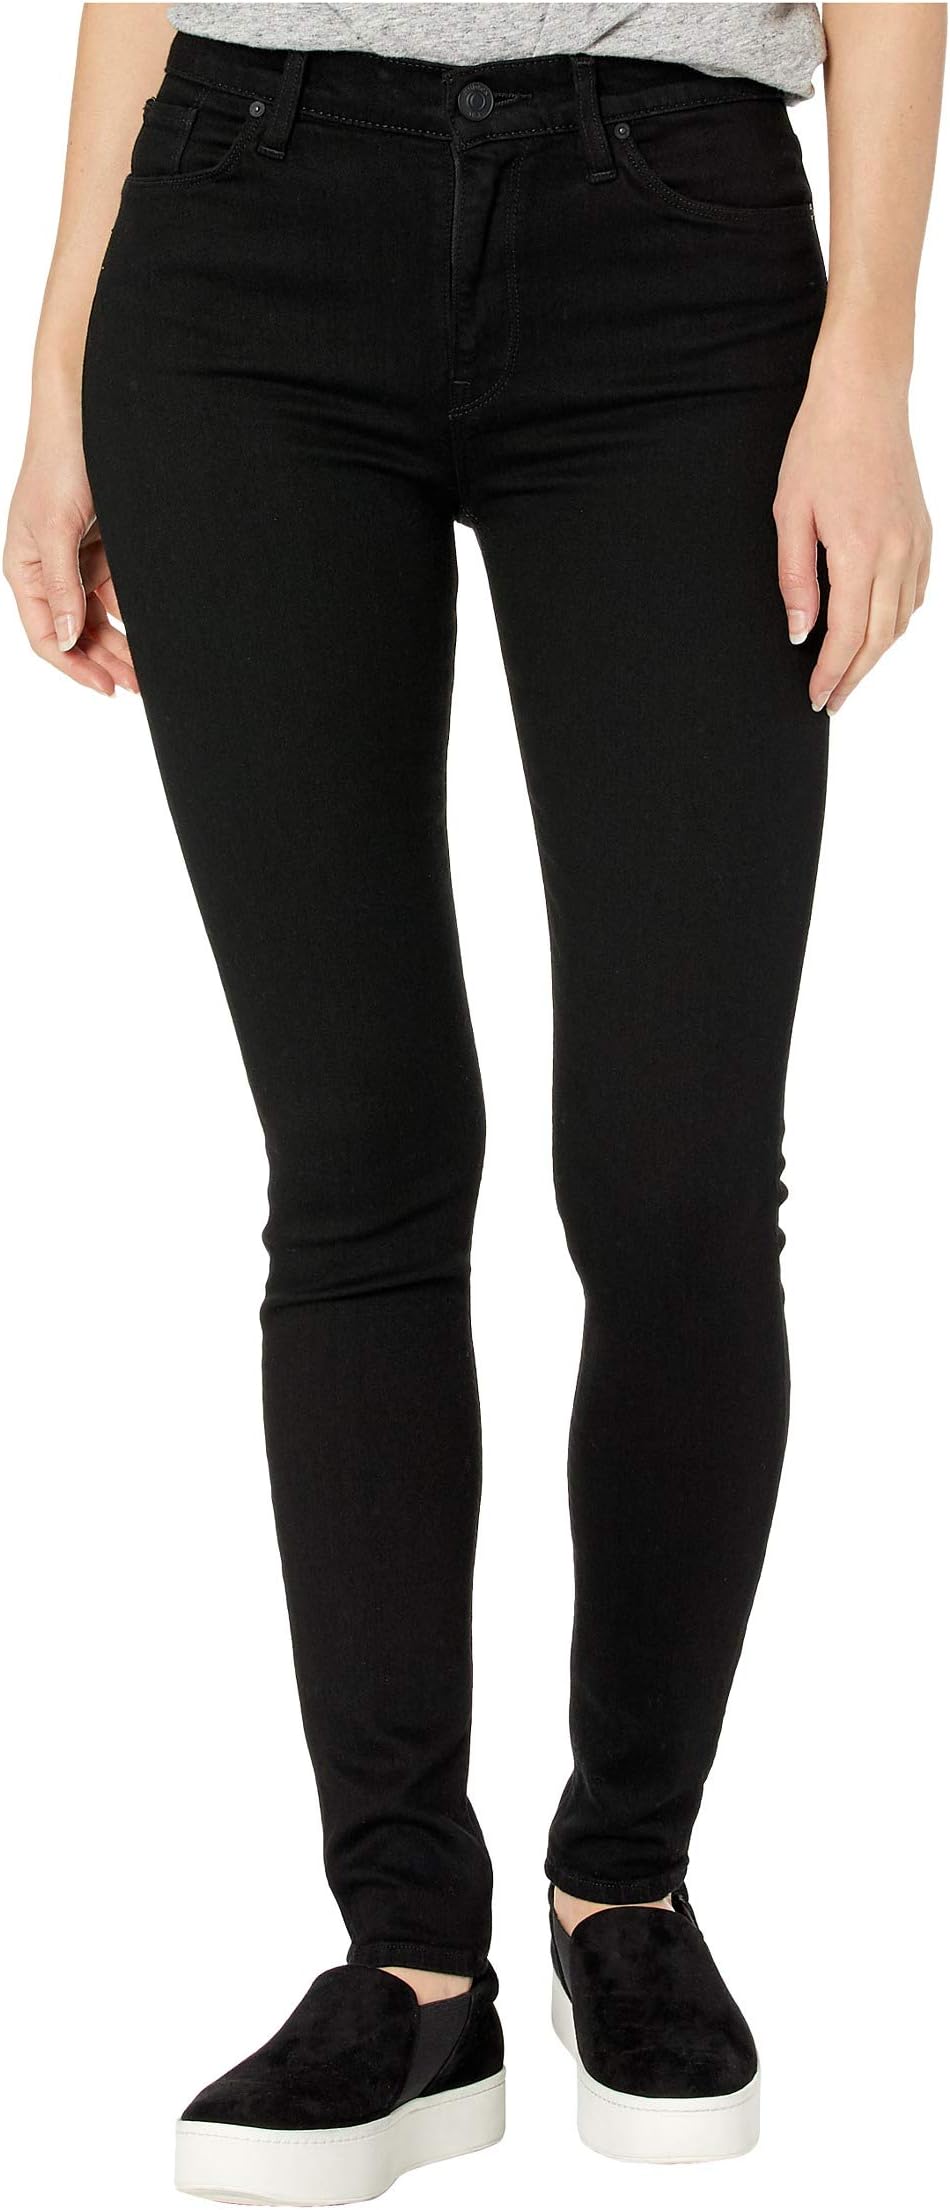 Джинсы Barbara High-Waist Super Skinny in Black Hudson Jeans, черный